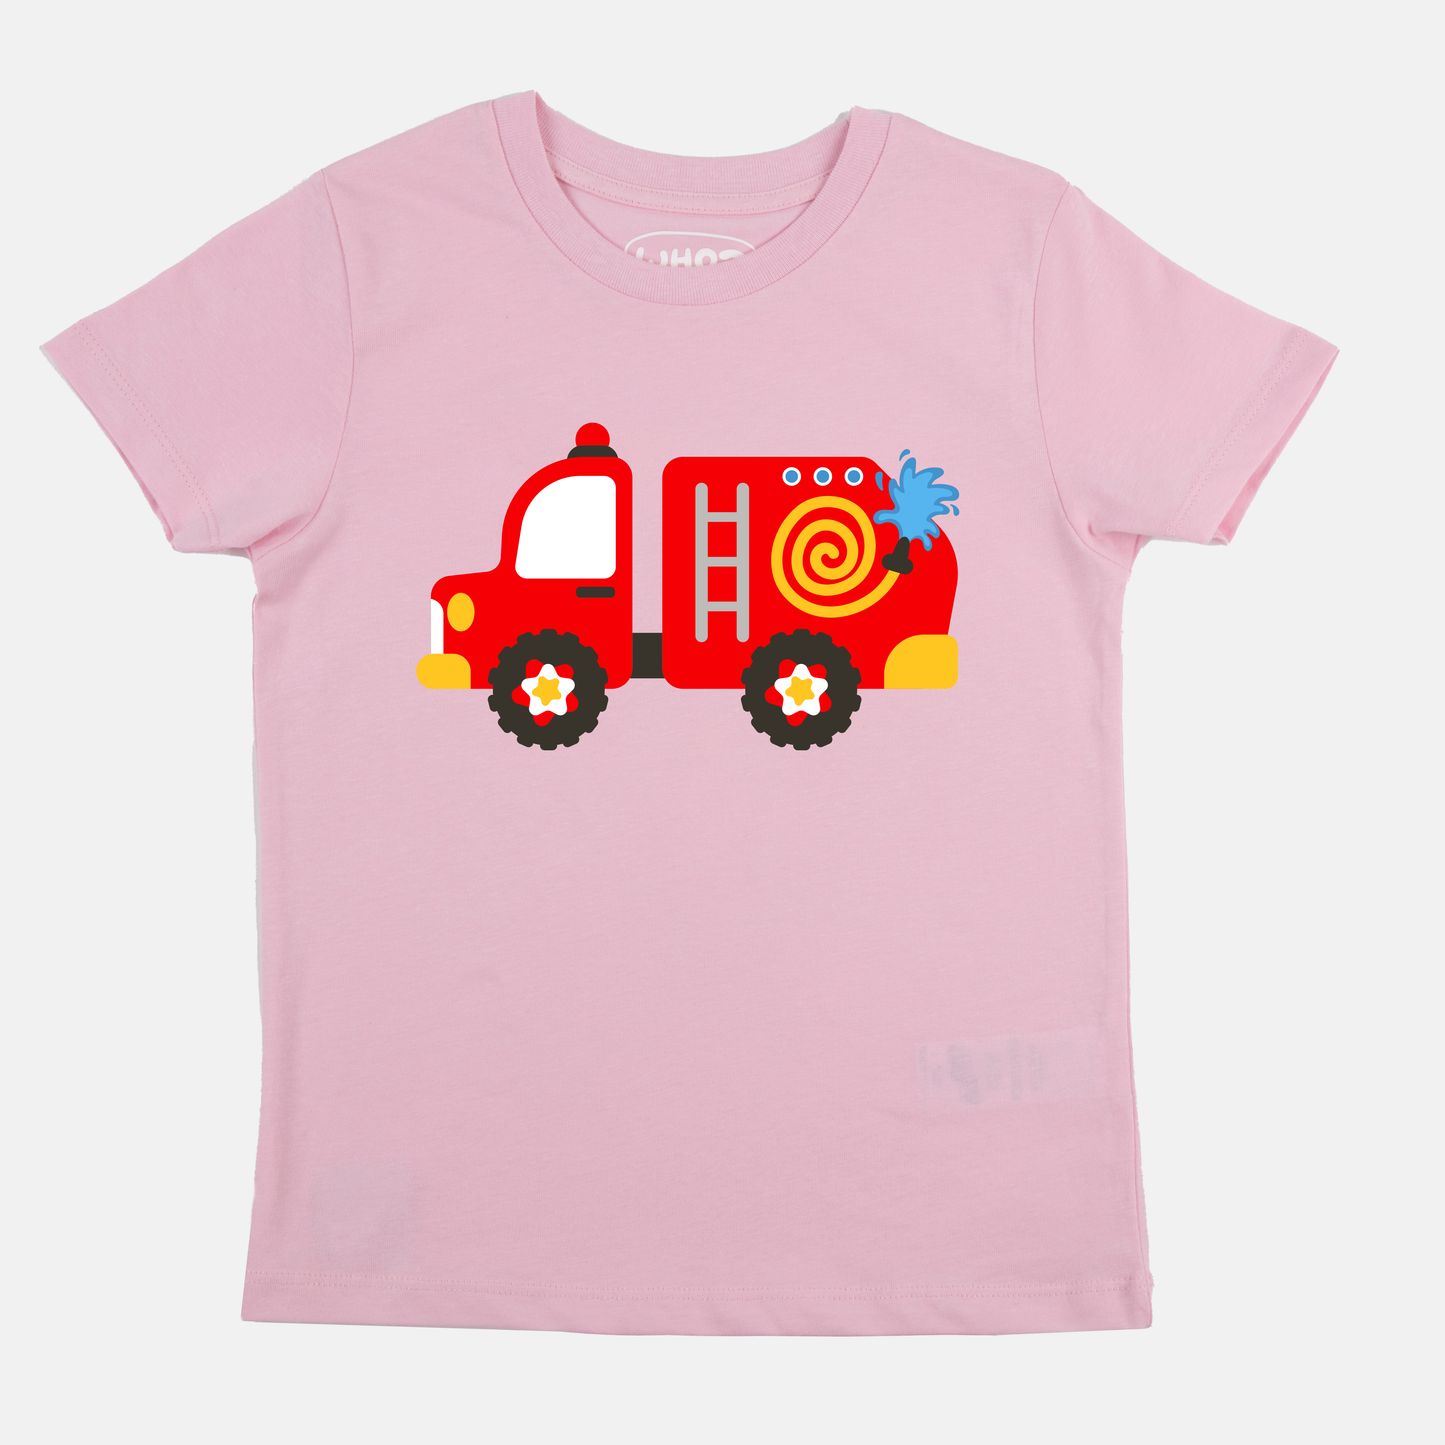 Who said - T-Shirt - Feuerwehr